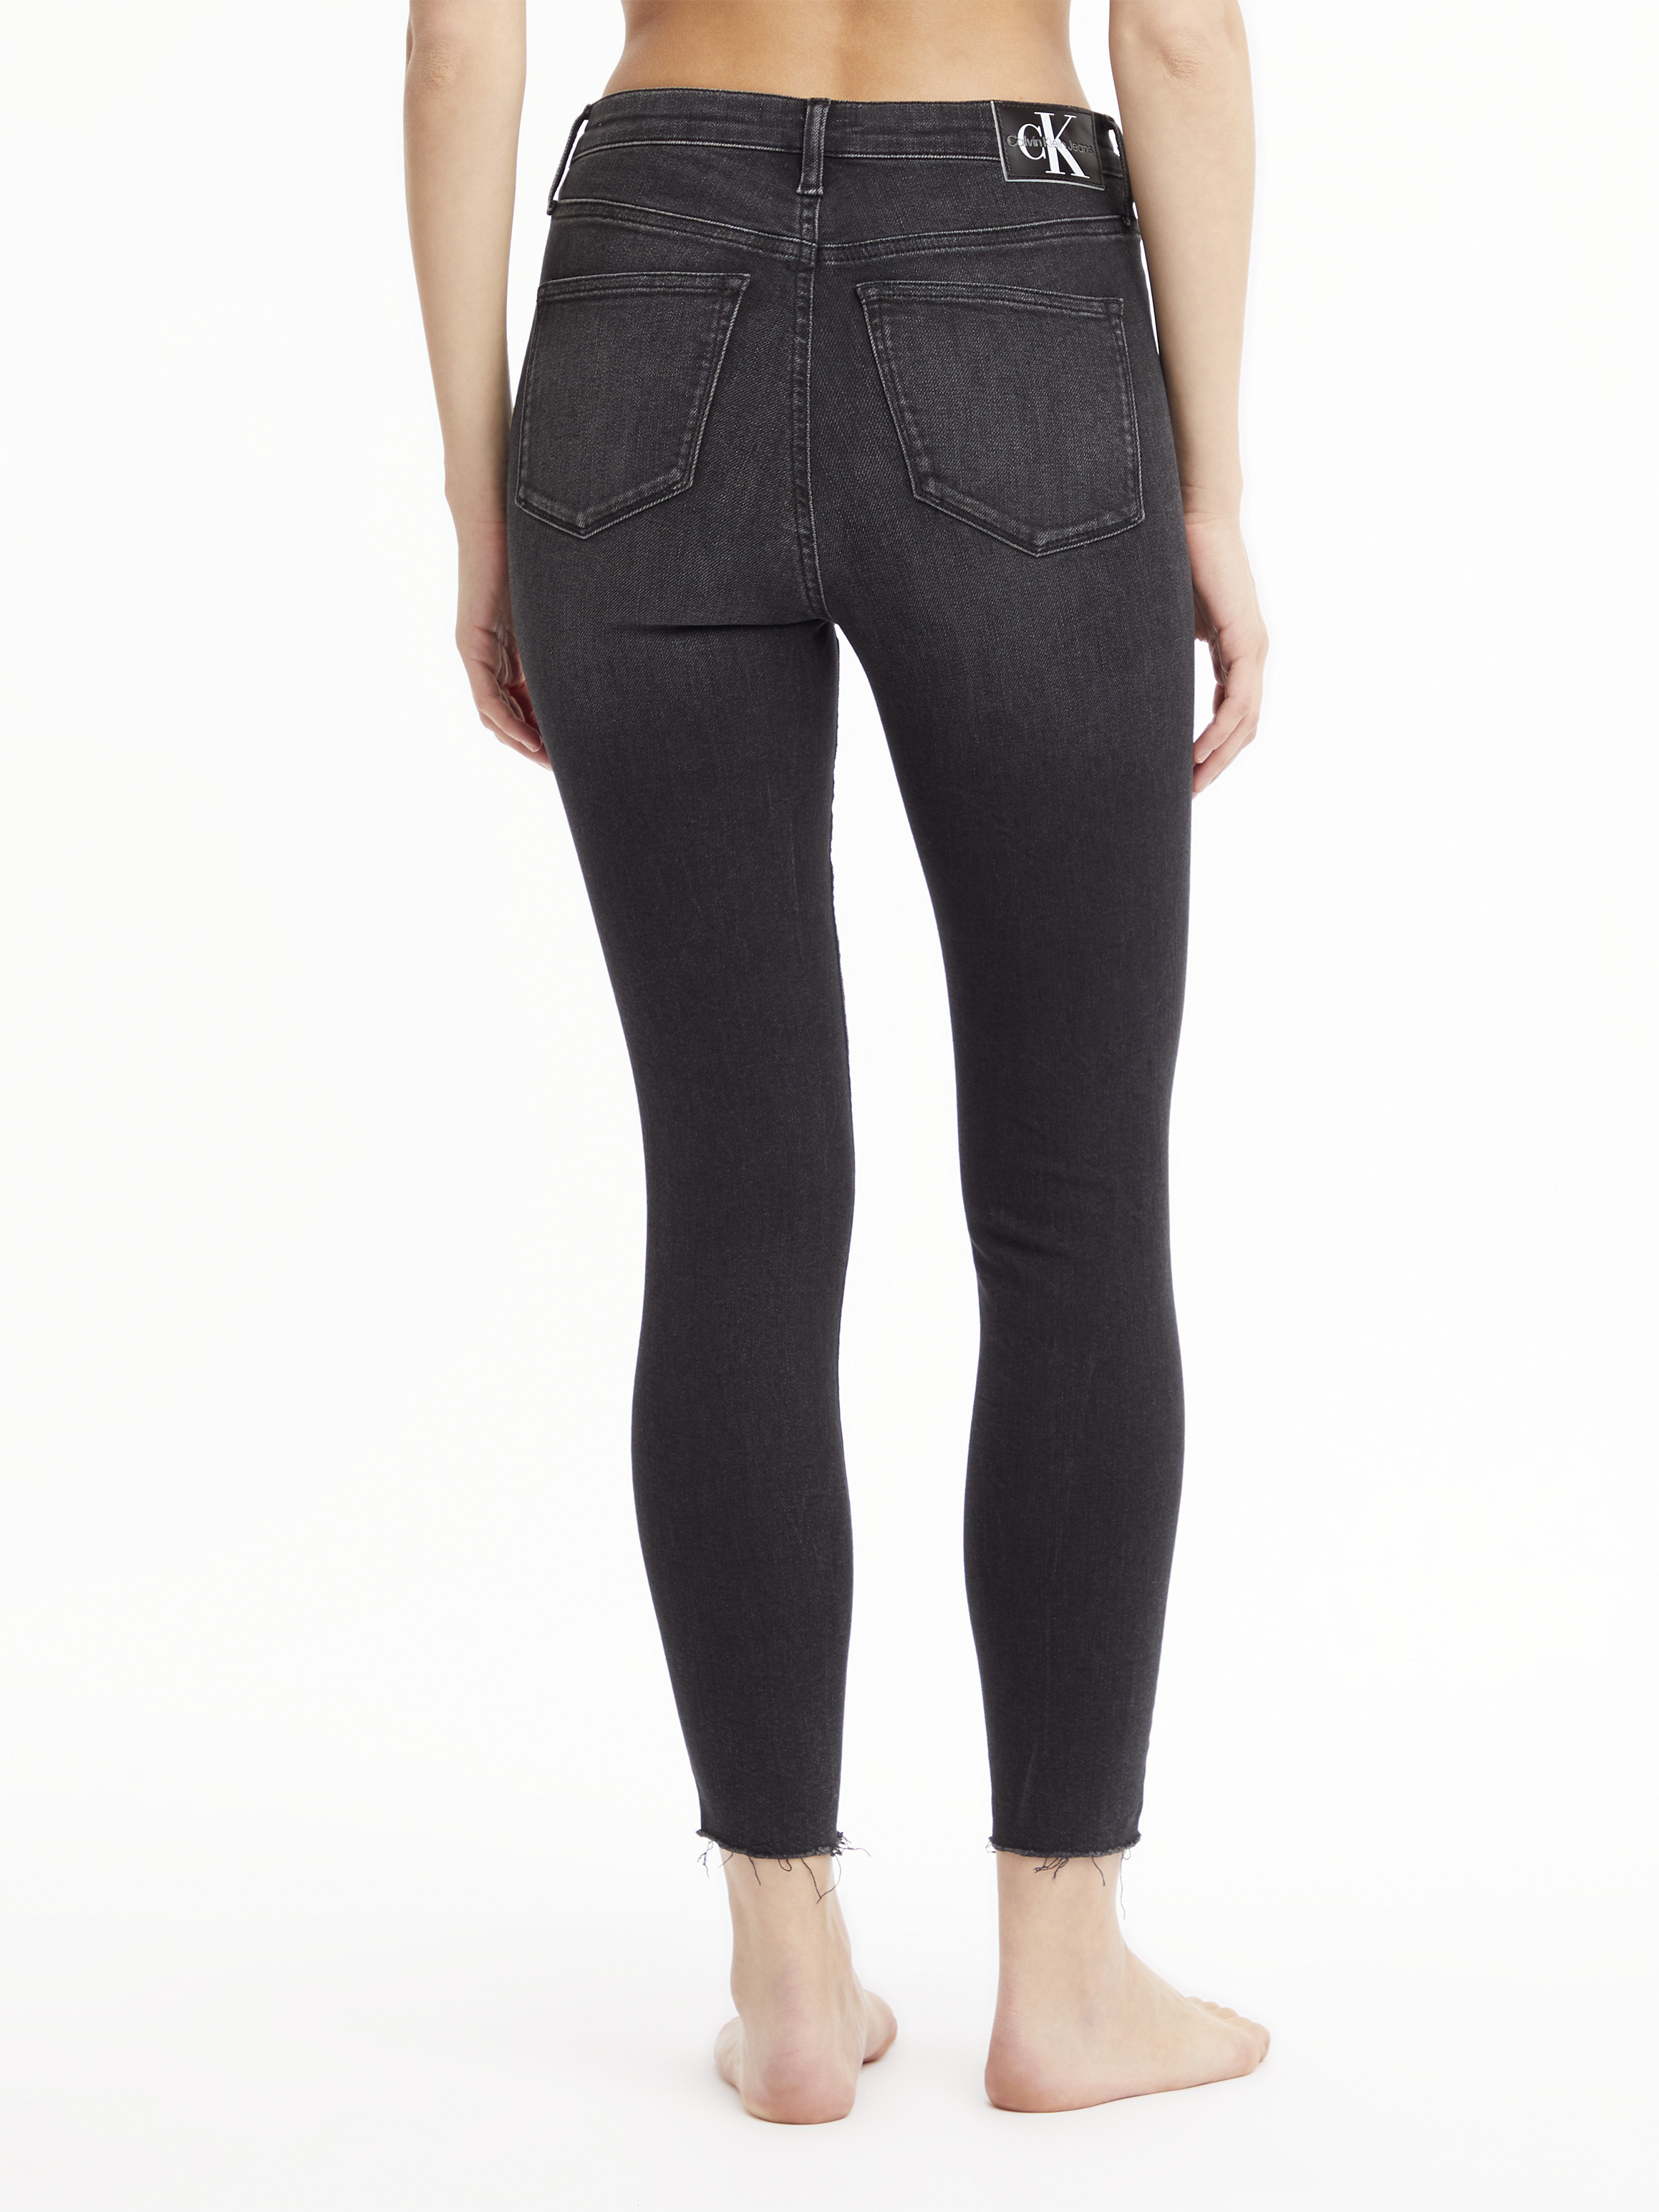 Calvin Klein Jeans - Jeans cinque tasche super skinny, Nero, large image number 6